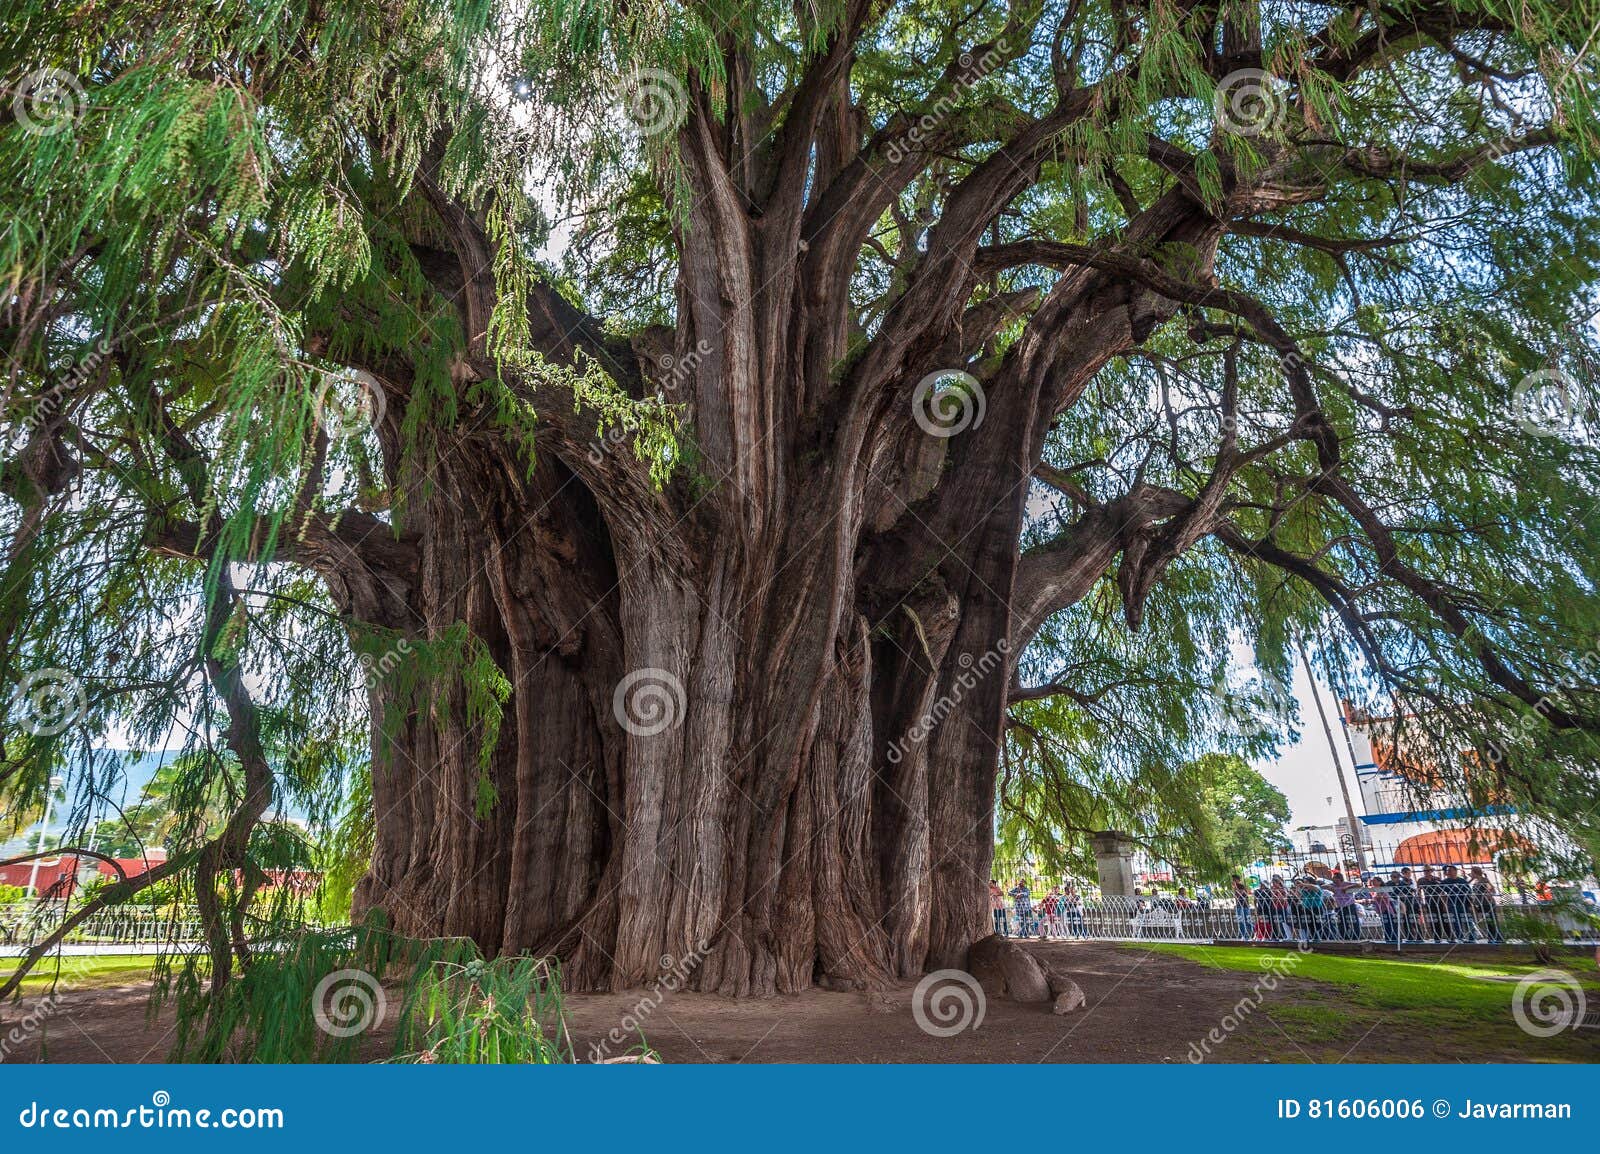 arbol del tule, a giant sacred tree in tule, oaxaca, mexico